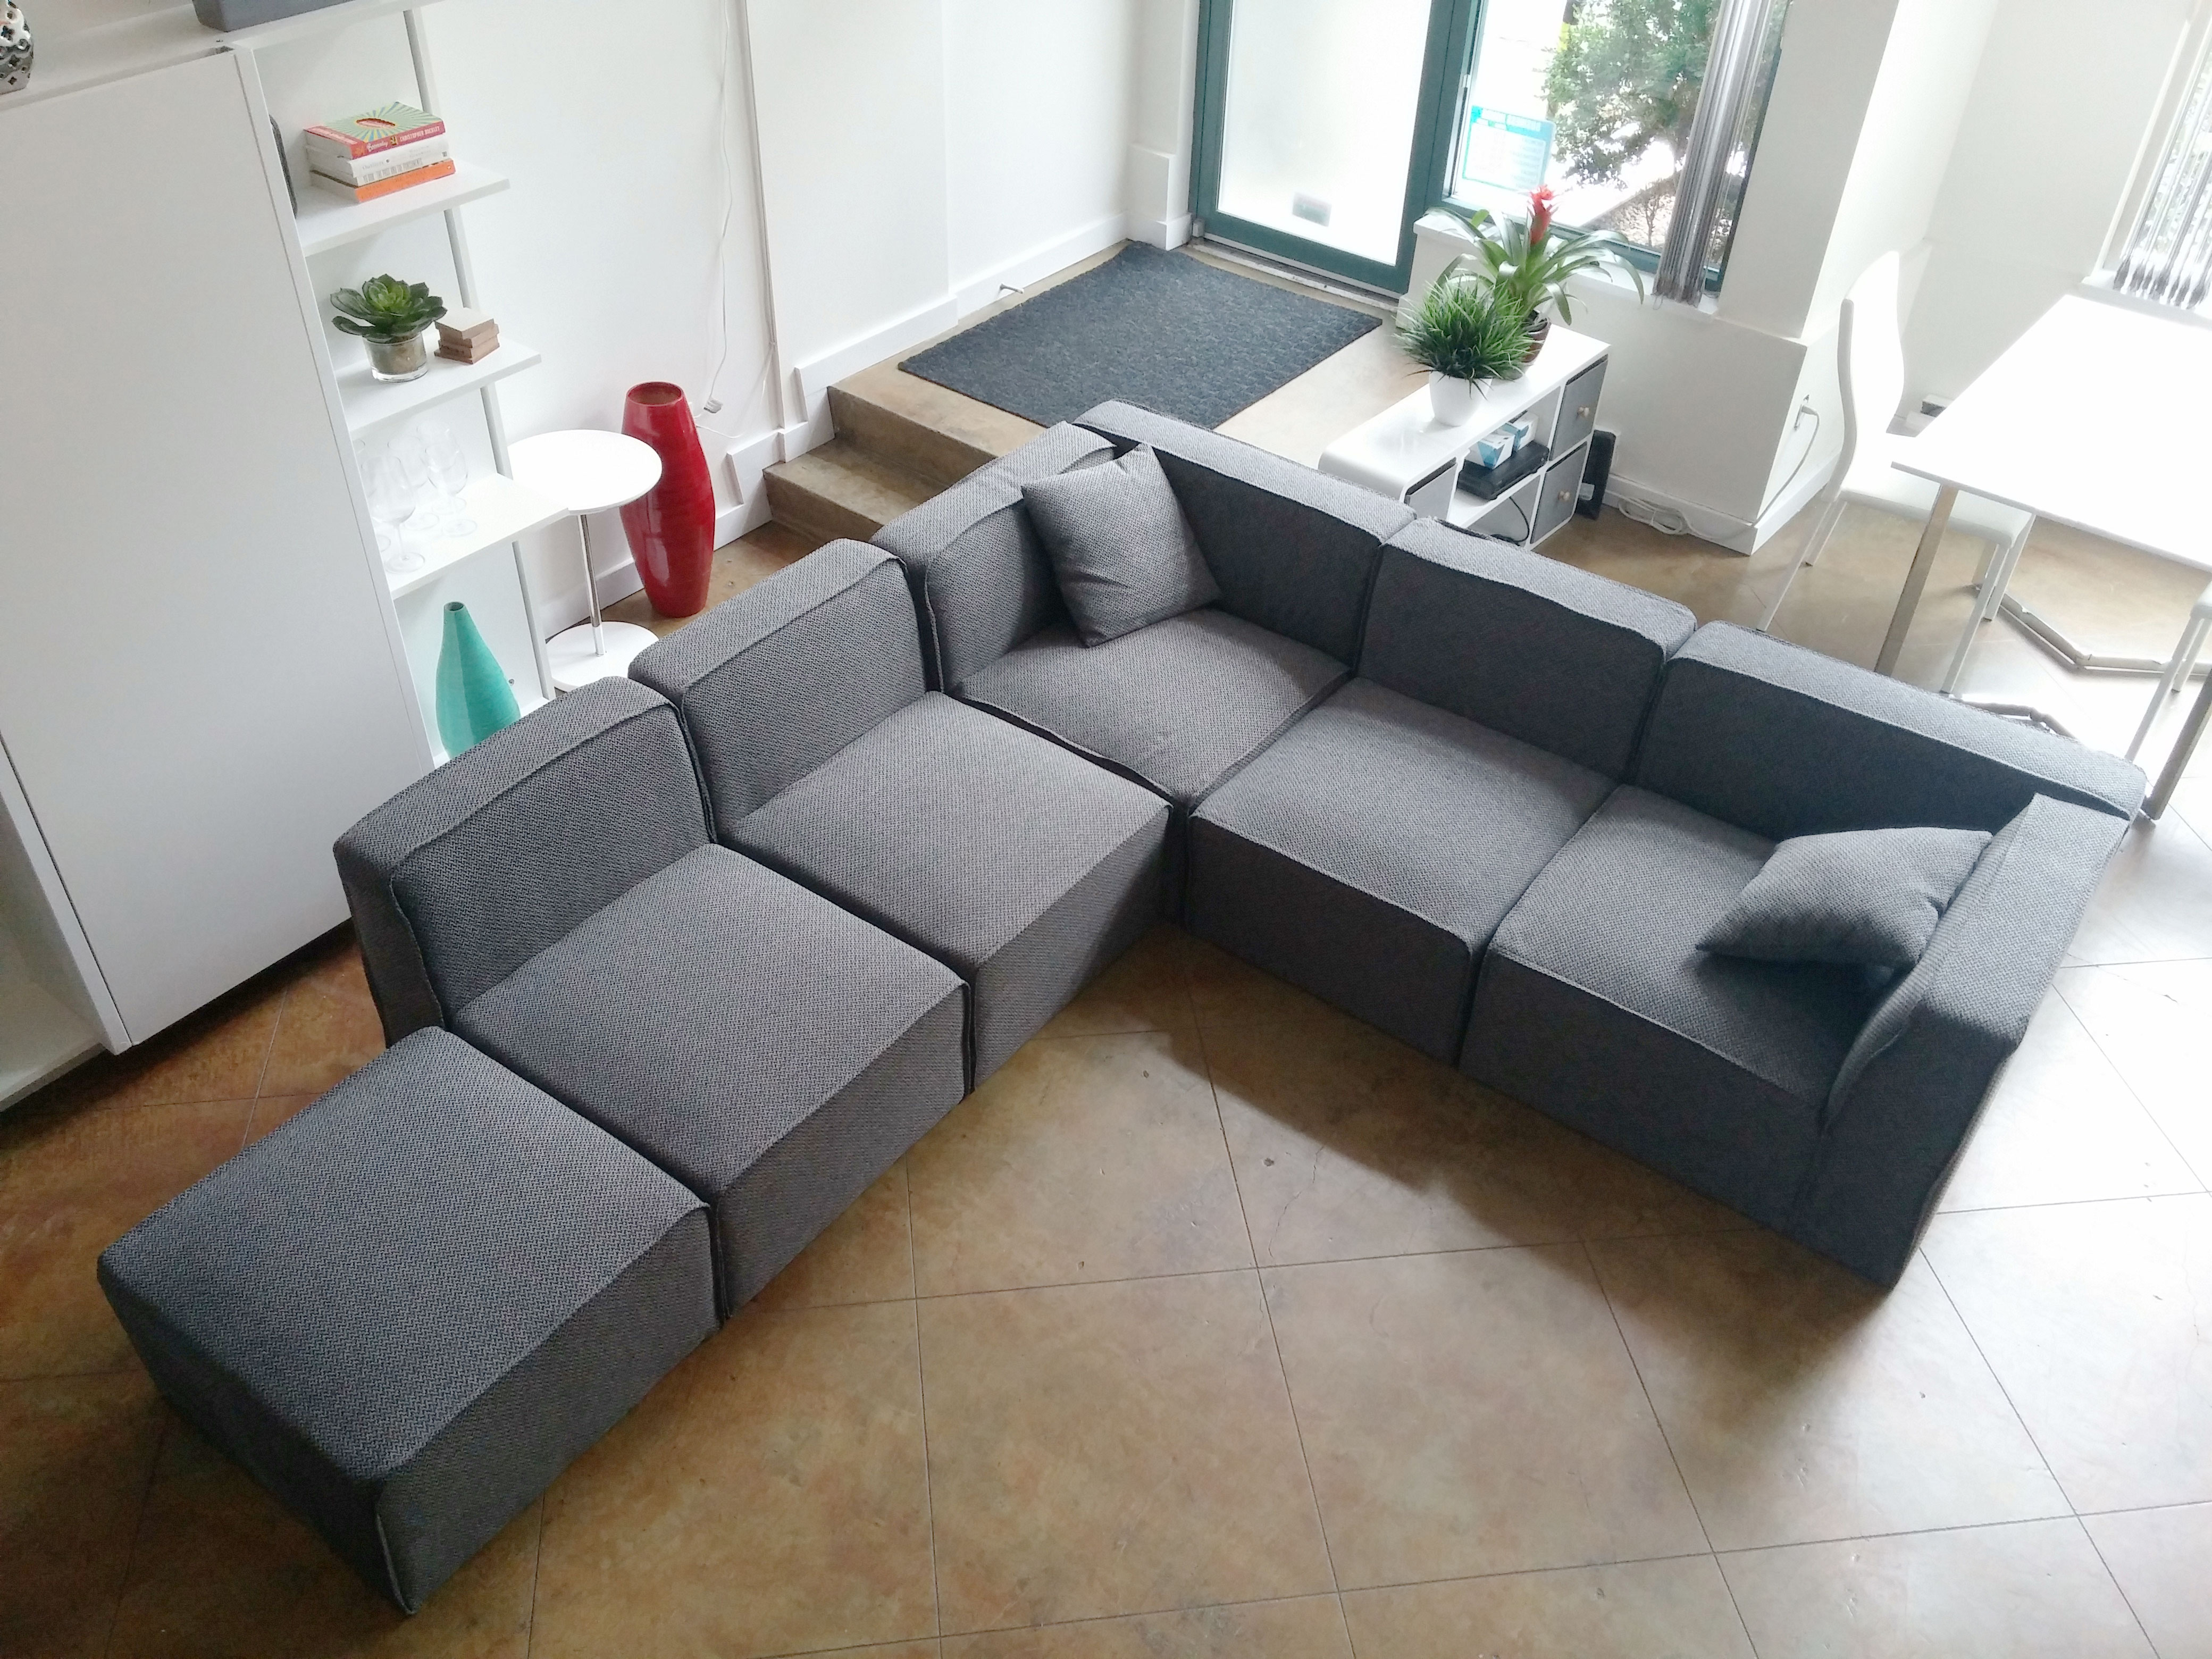 Soft-Cube: Modern Modular Sofa - Expand Furniture - Folding Tables, Smarter Wall Space Savers